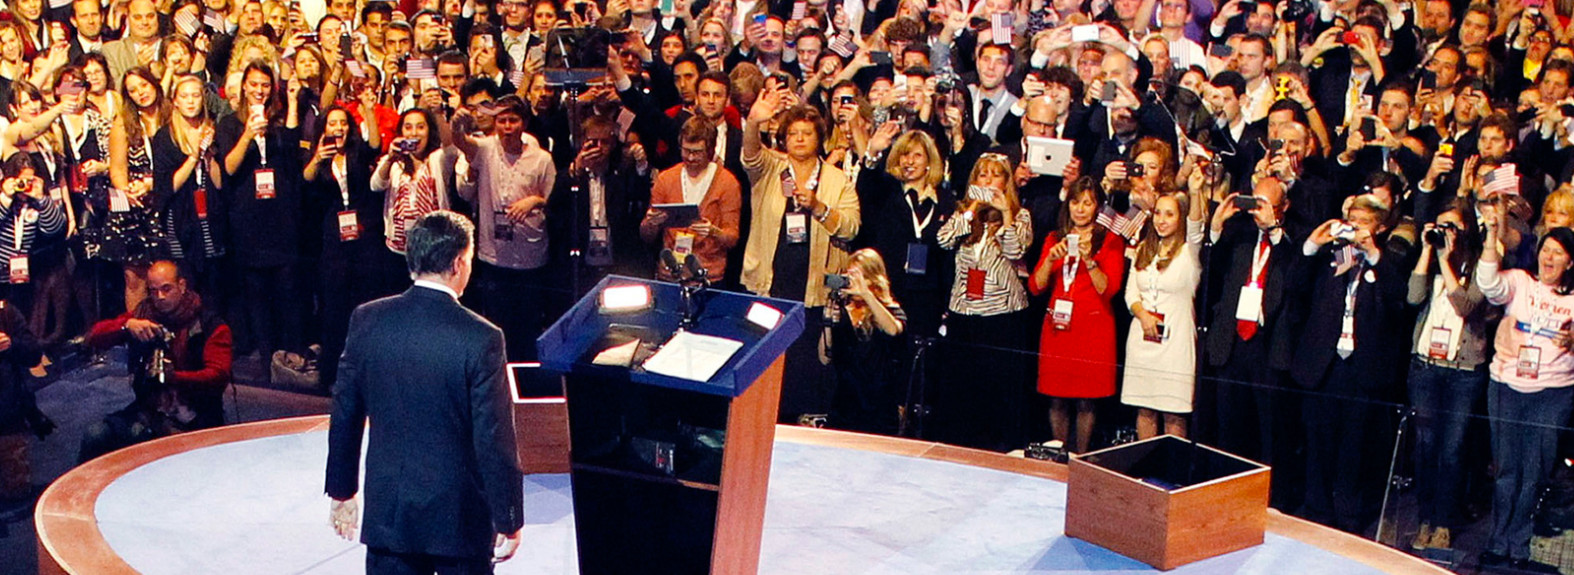 Mitt Romney walking to a podium